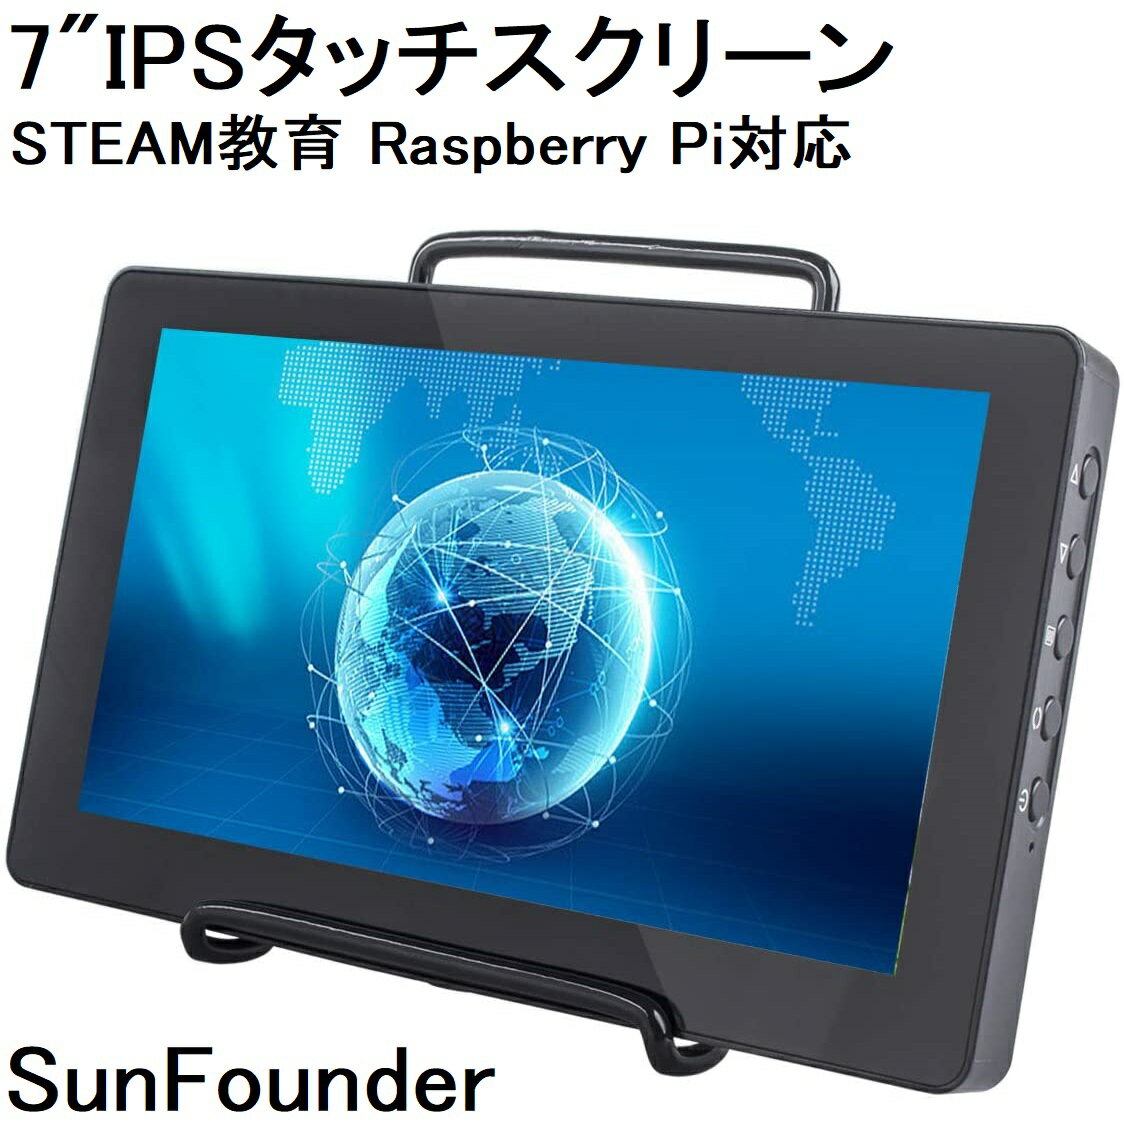 ^b`XN[j^[ 7C` IPS LCD Raspberry Pi ^b`XN[j^[ HDMI X^h Raspberry Pi 4B/3B+/3B WindowsɑΉ SunFounder